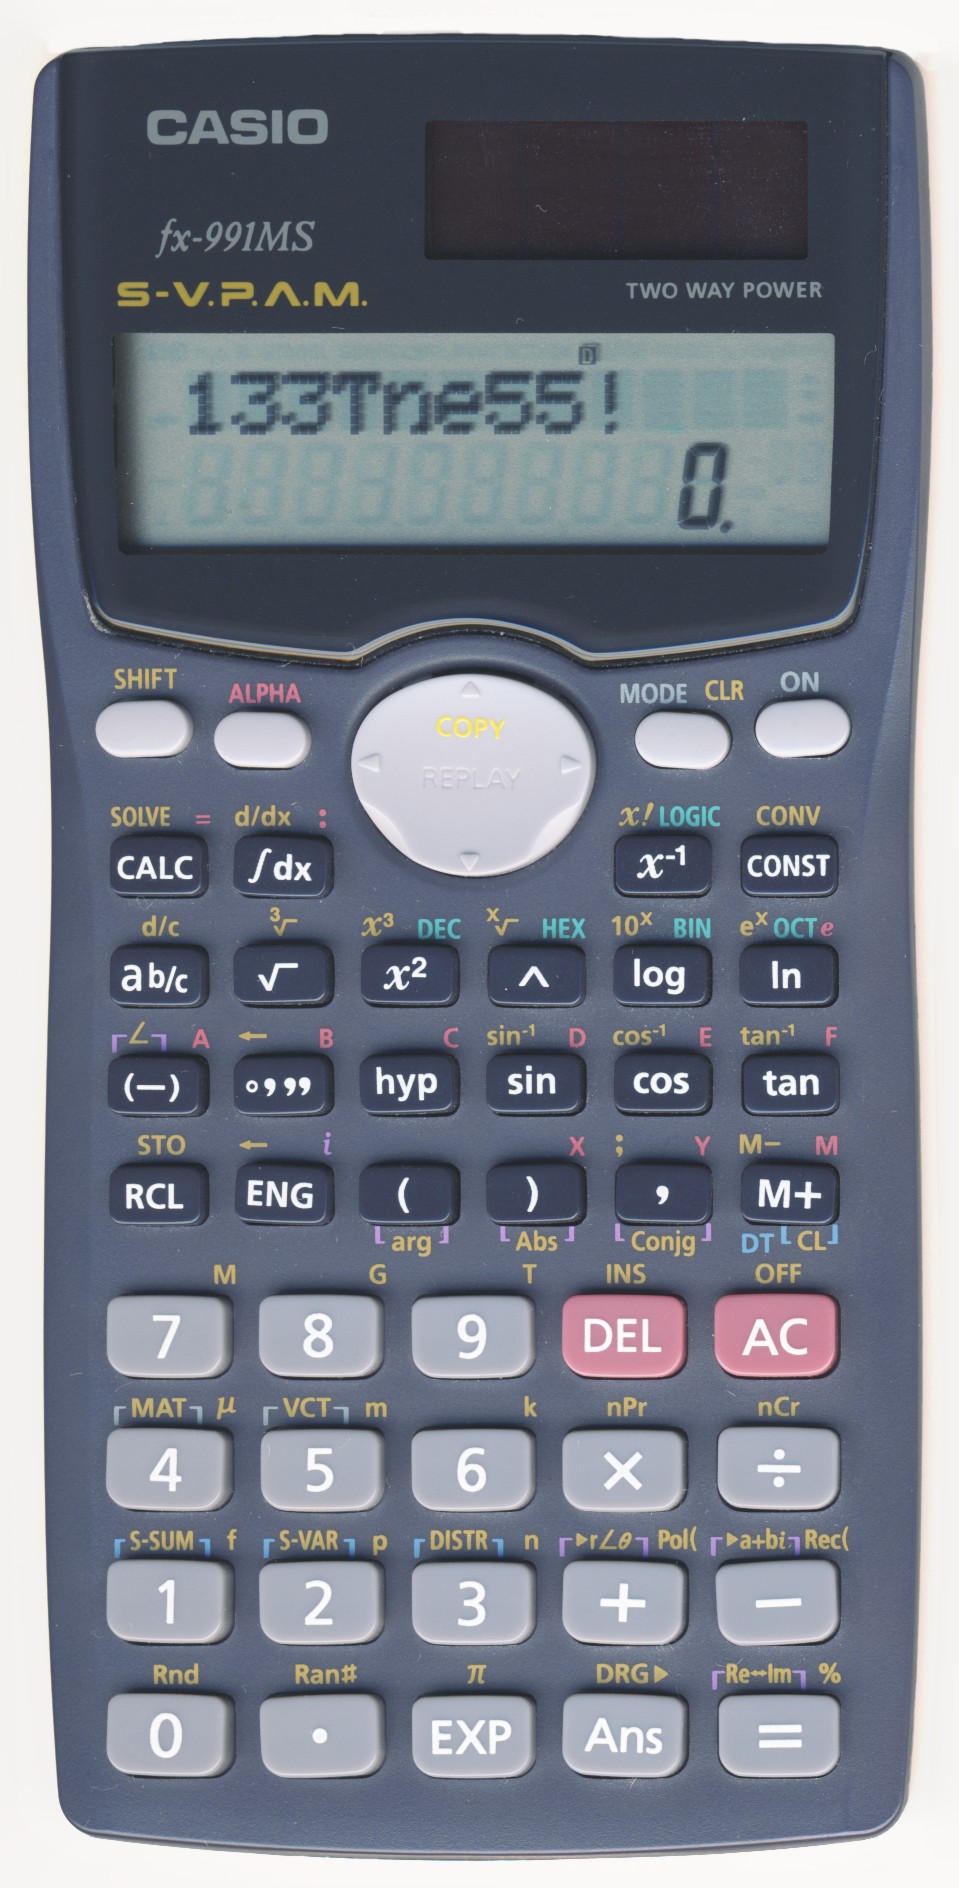 Download casio calculator for macbook air